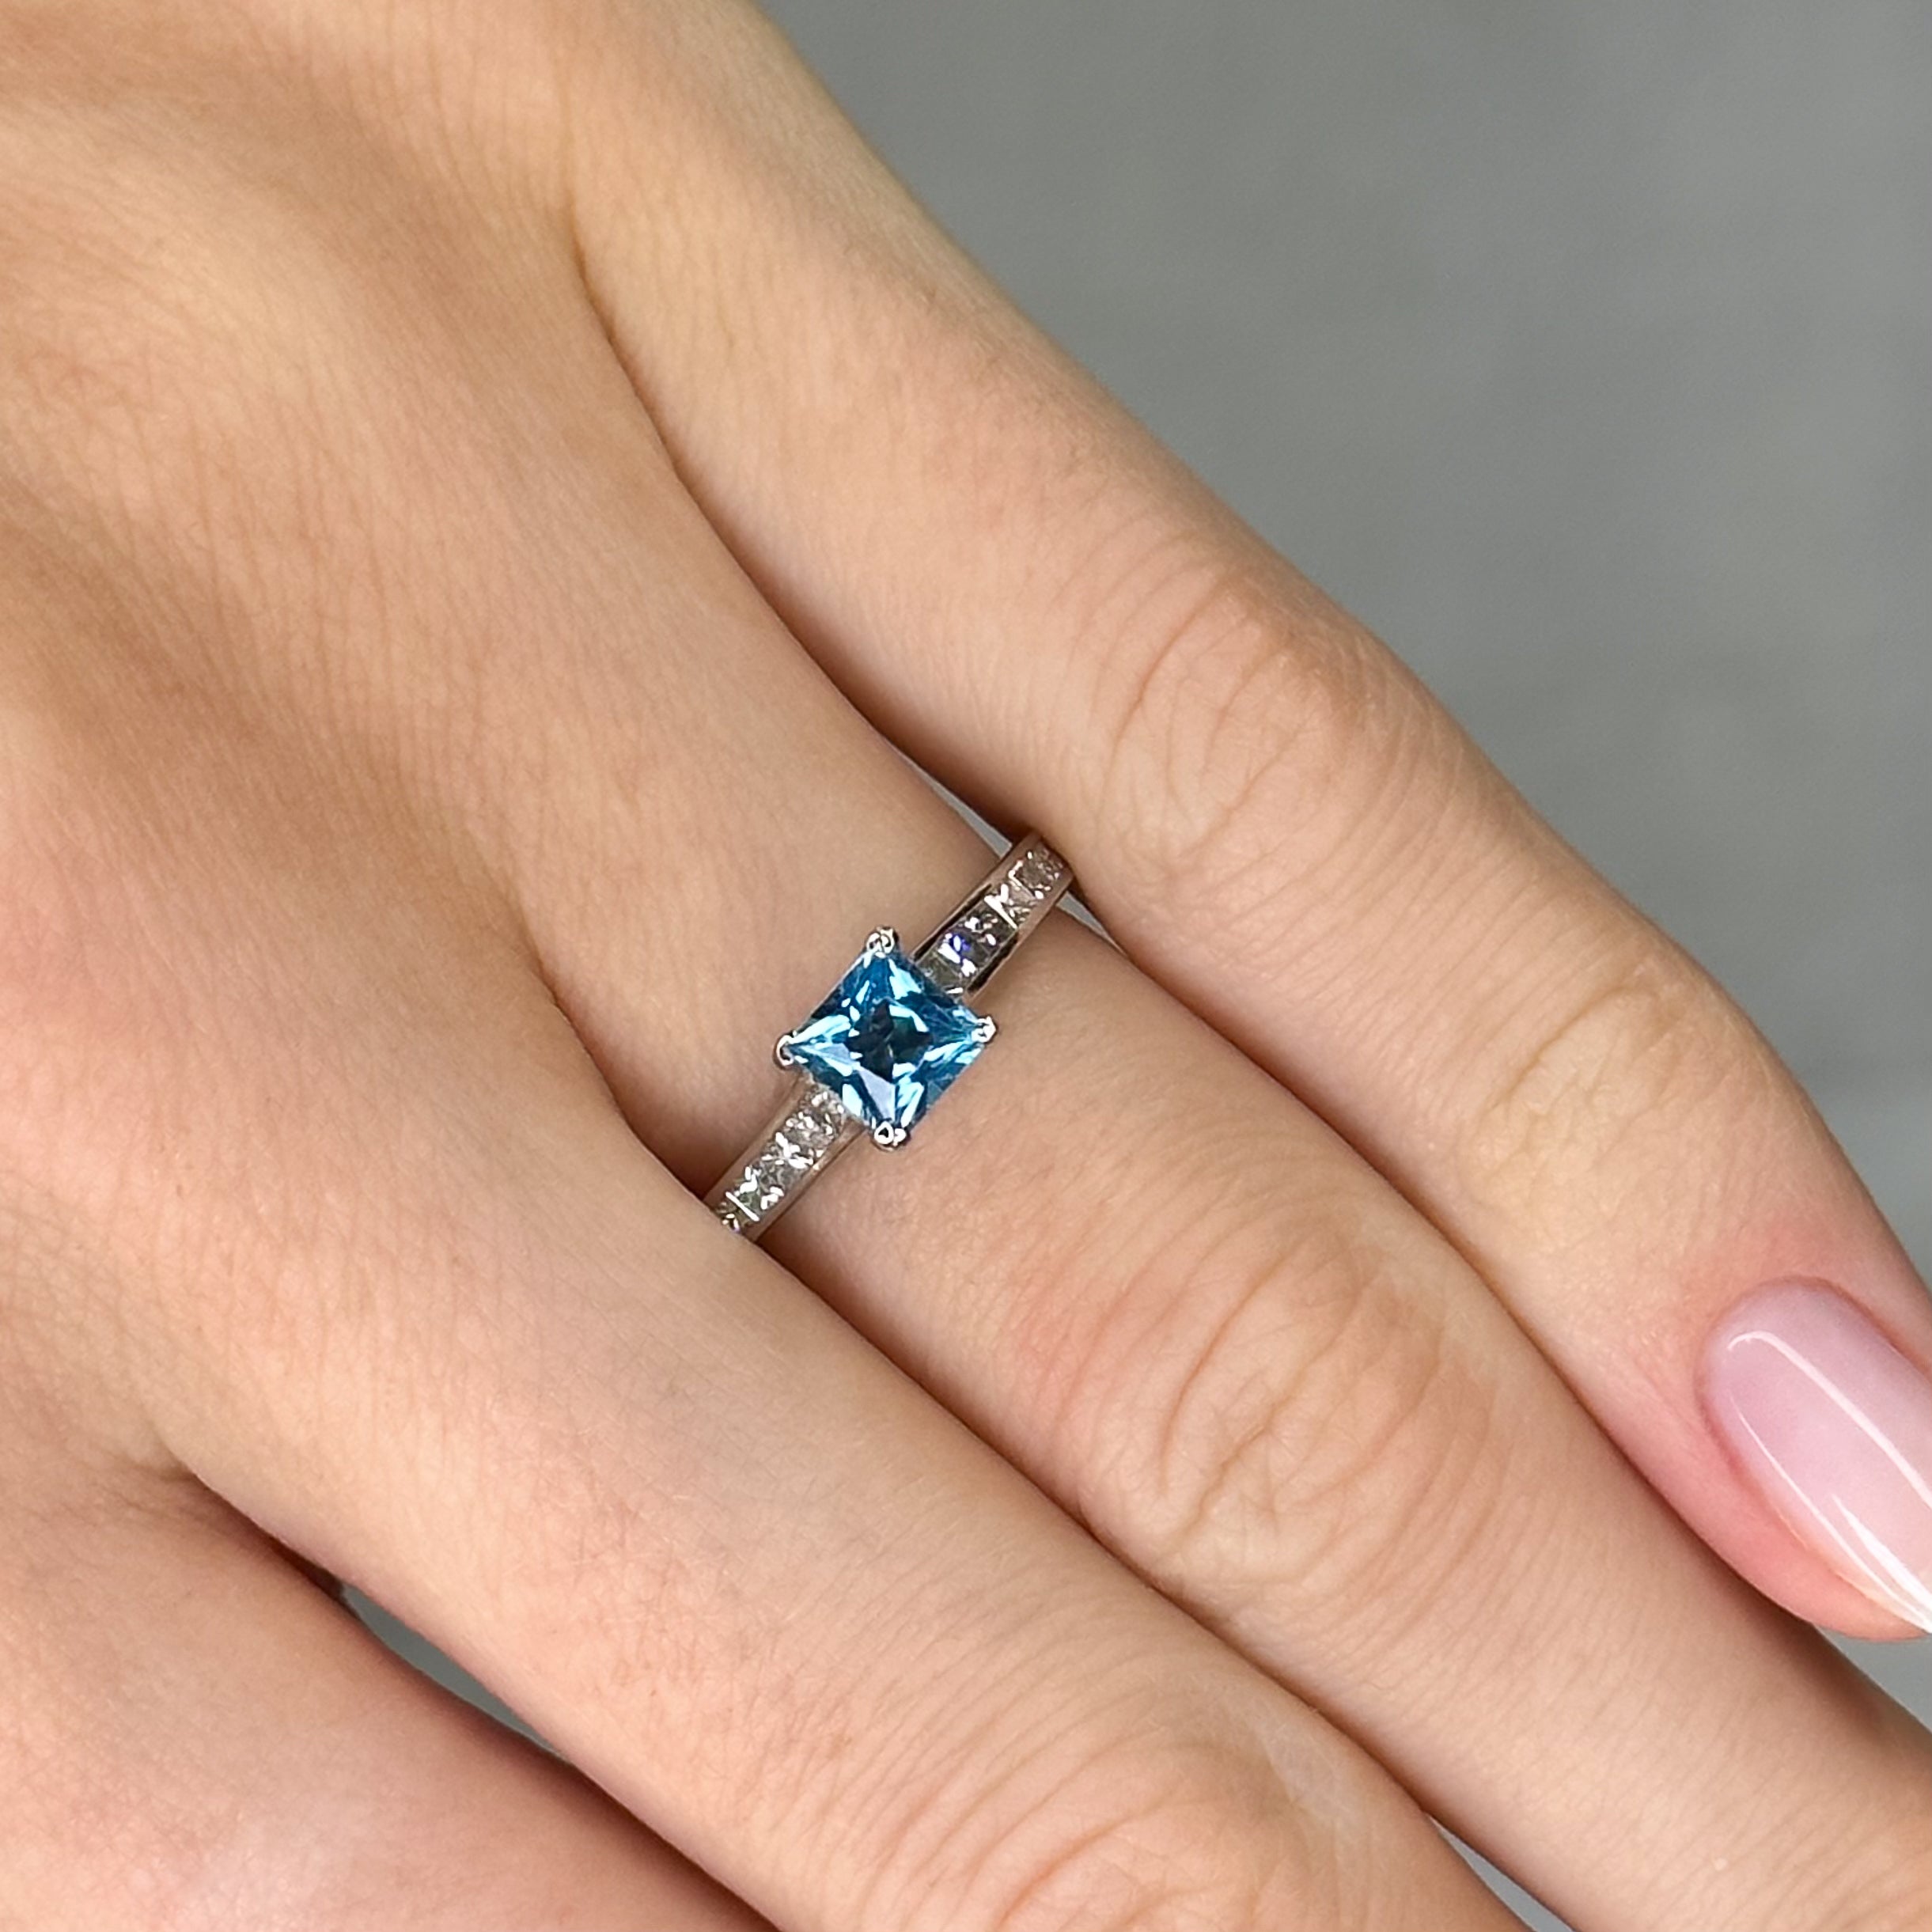 Blue Topaz Ring with Diamonds